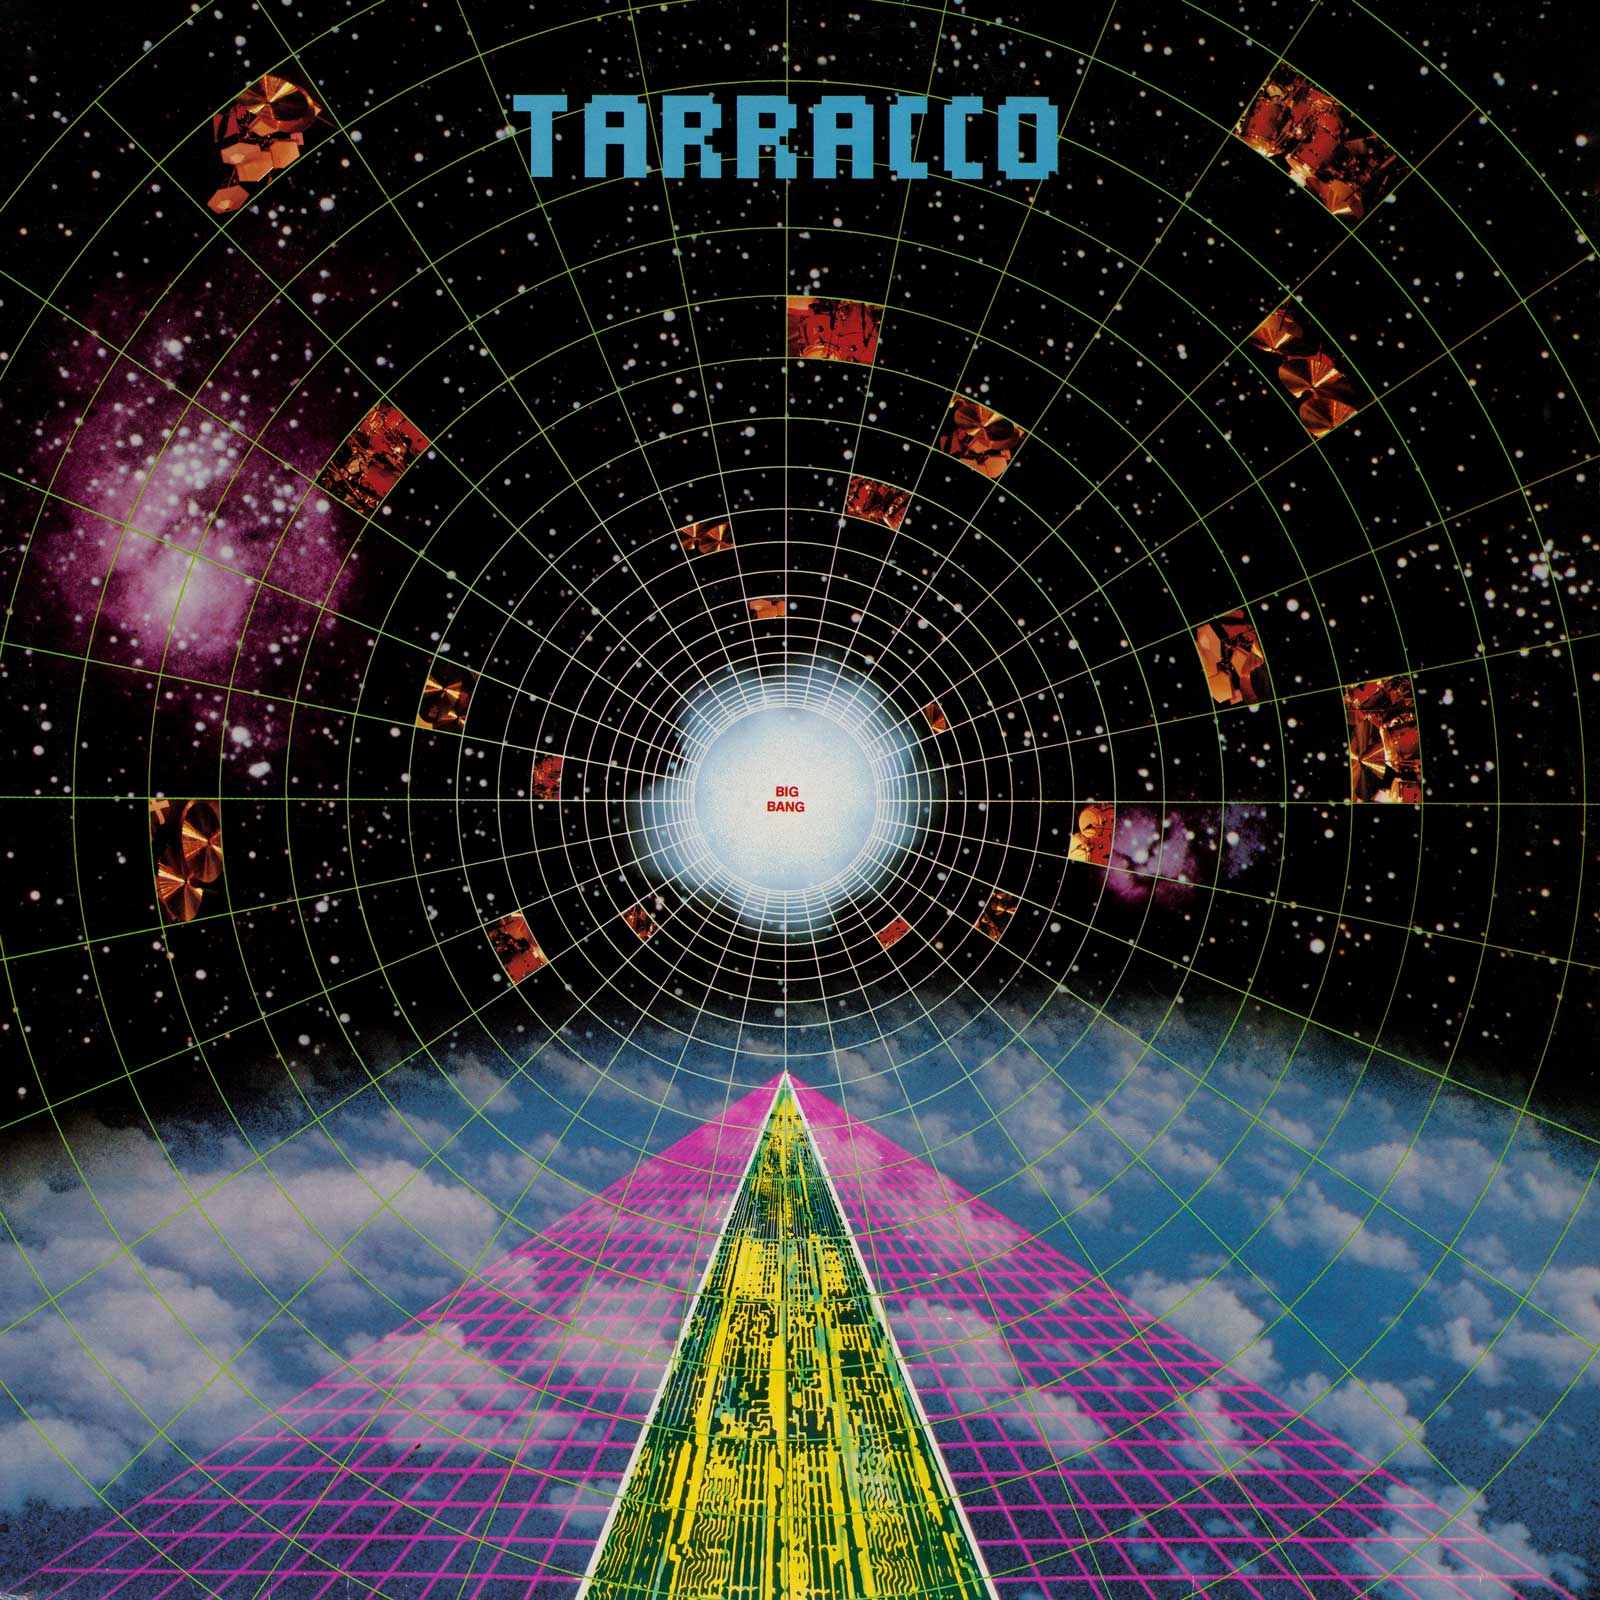 Tarracco – Big Bang